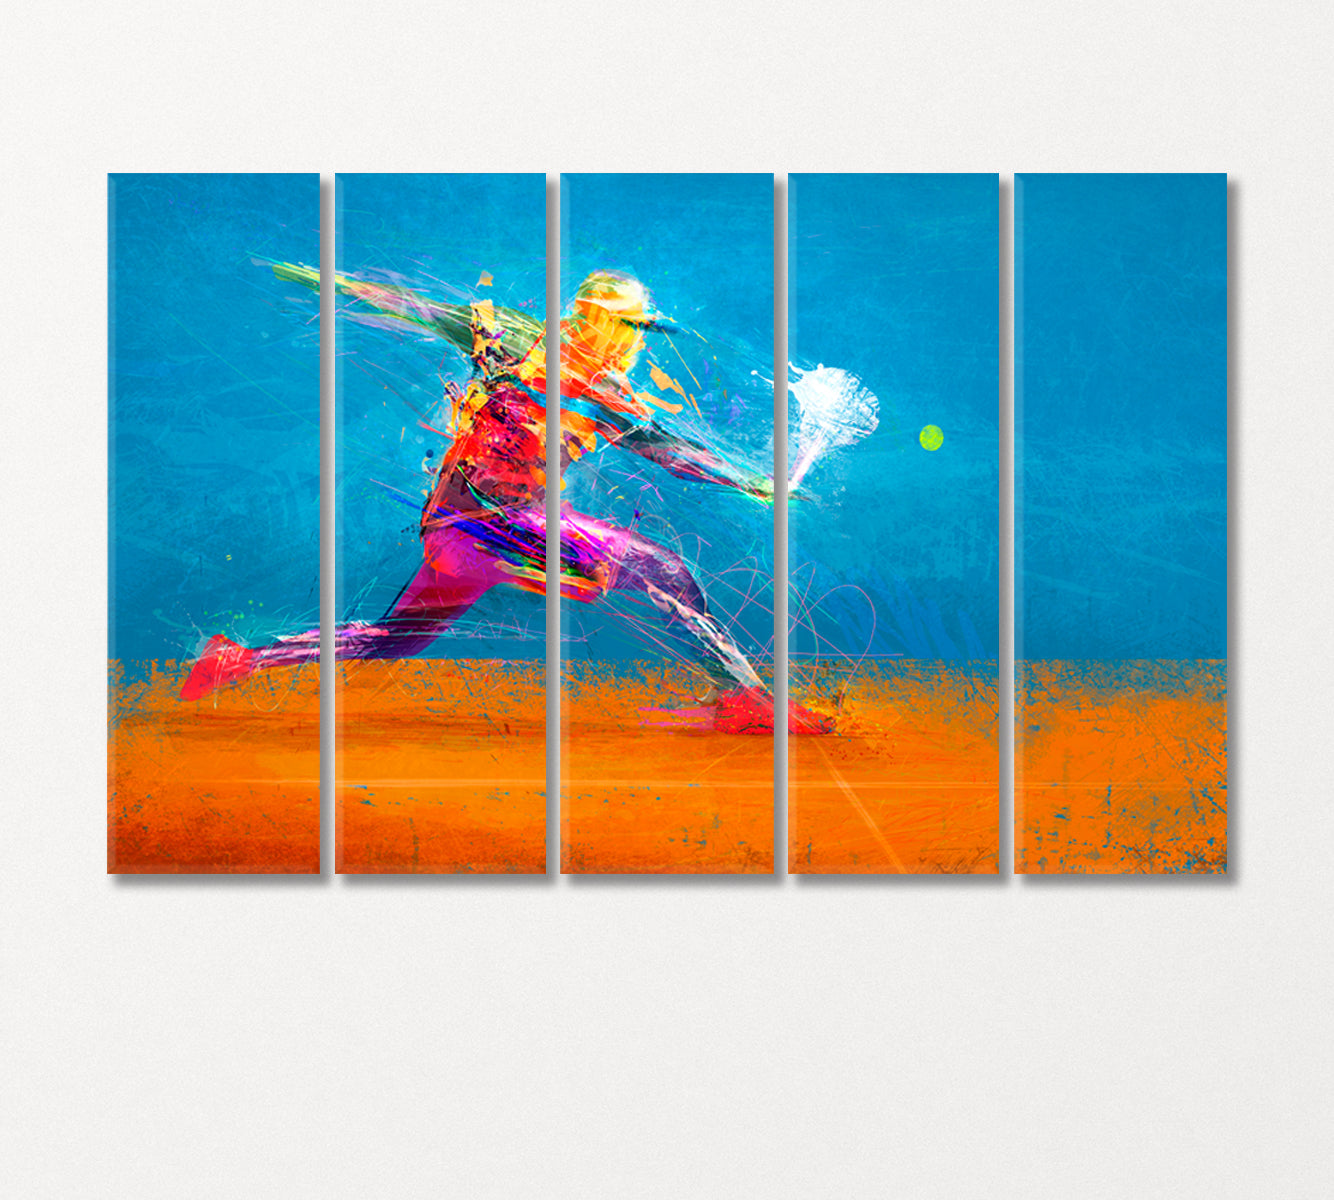 Abstract Tennis Player Canvas Print-CetArt-5 Panels-36x24 inches-CetArt